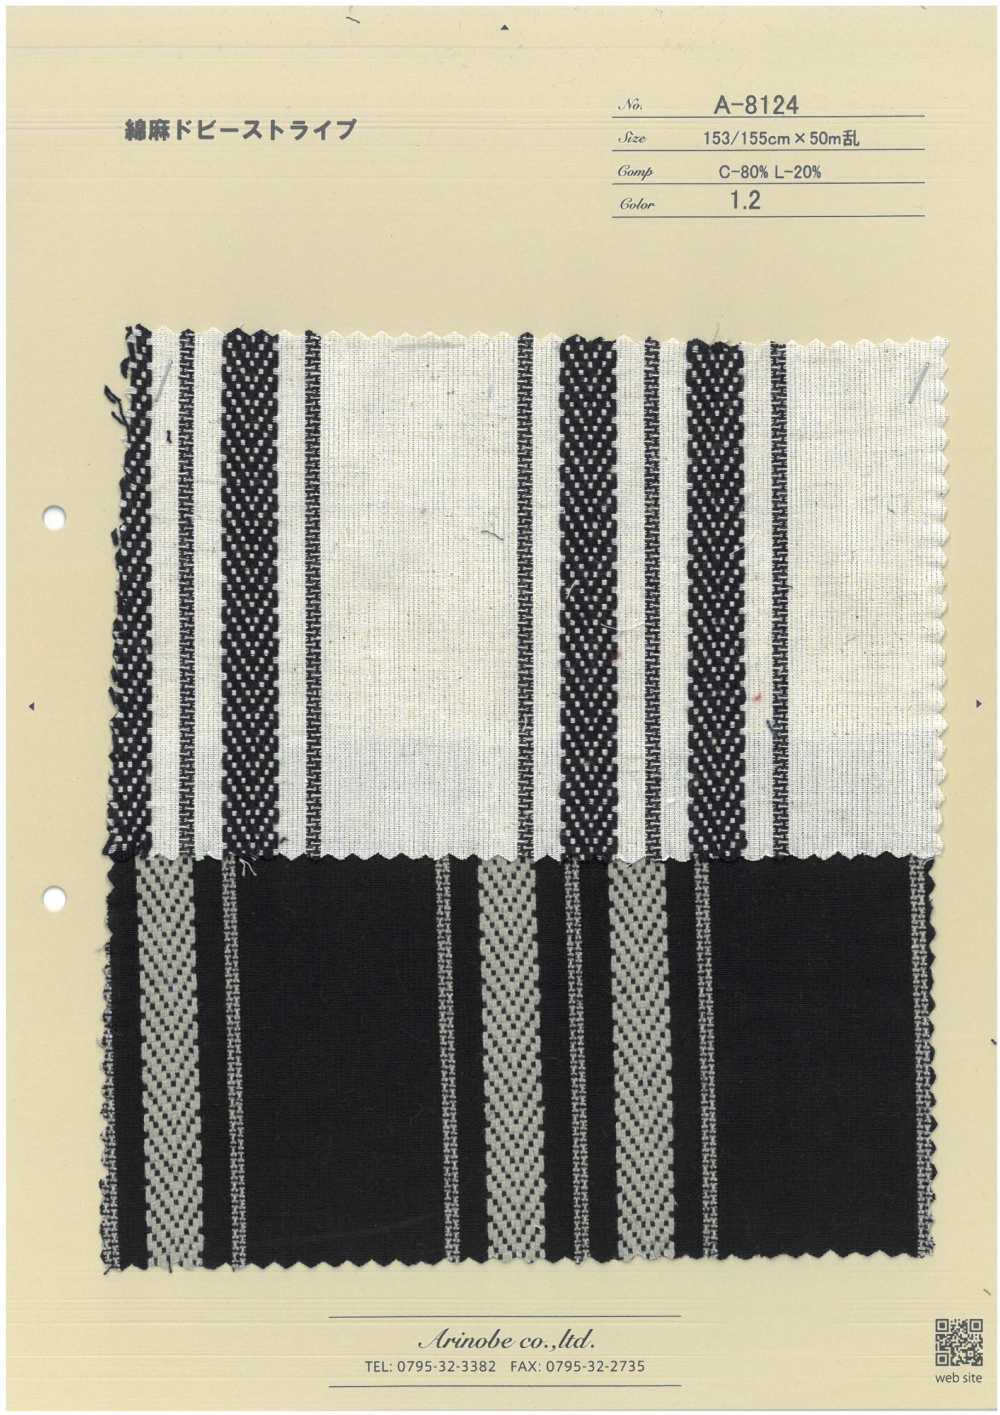 A-8124 Rayas Dobby De Lino Y Algodón[Fabrica Textil] ARINOBE CO., LTD.